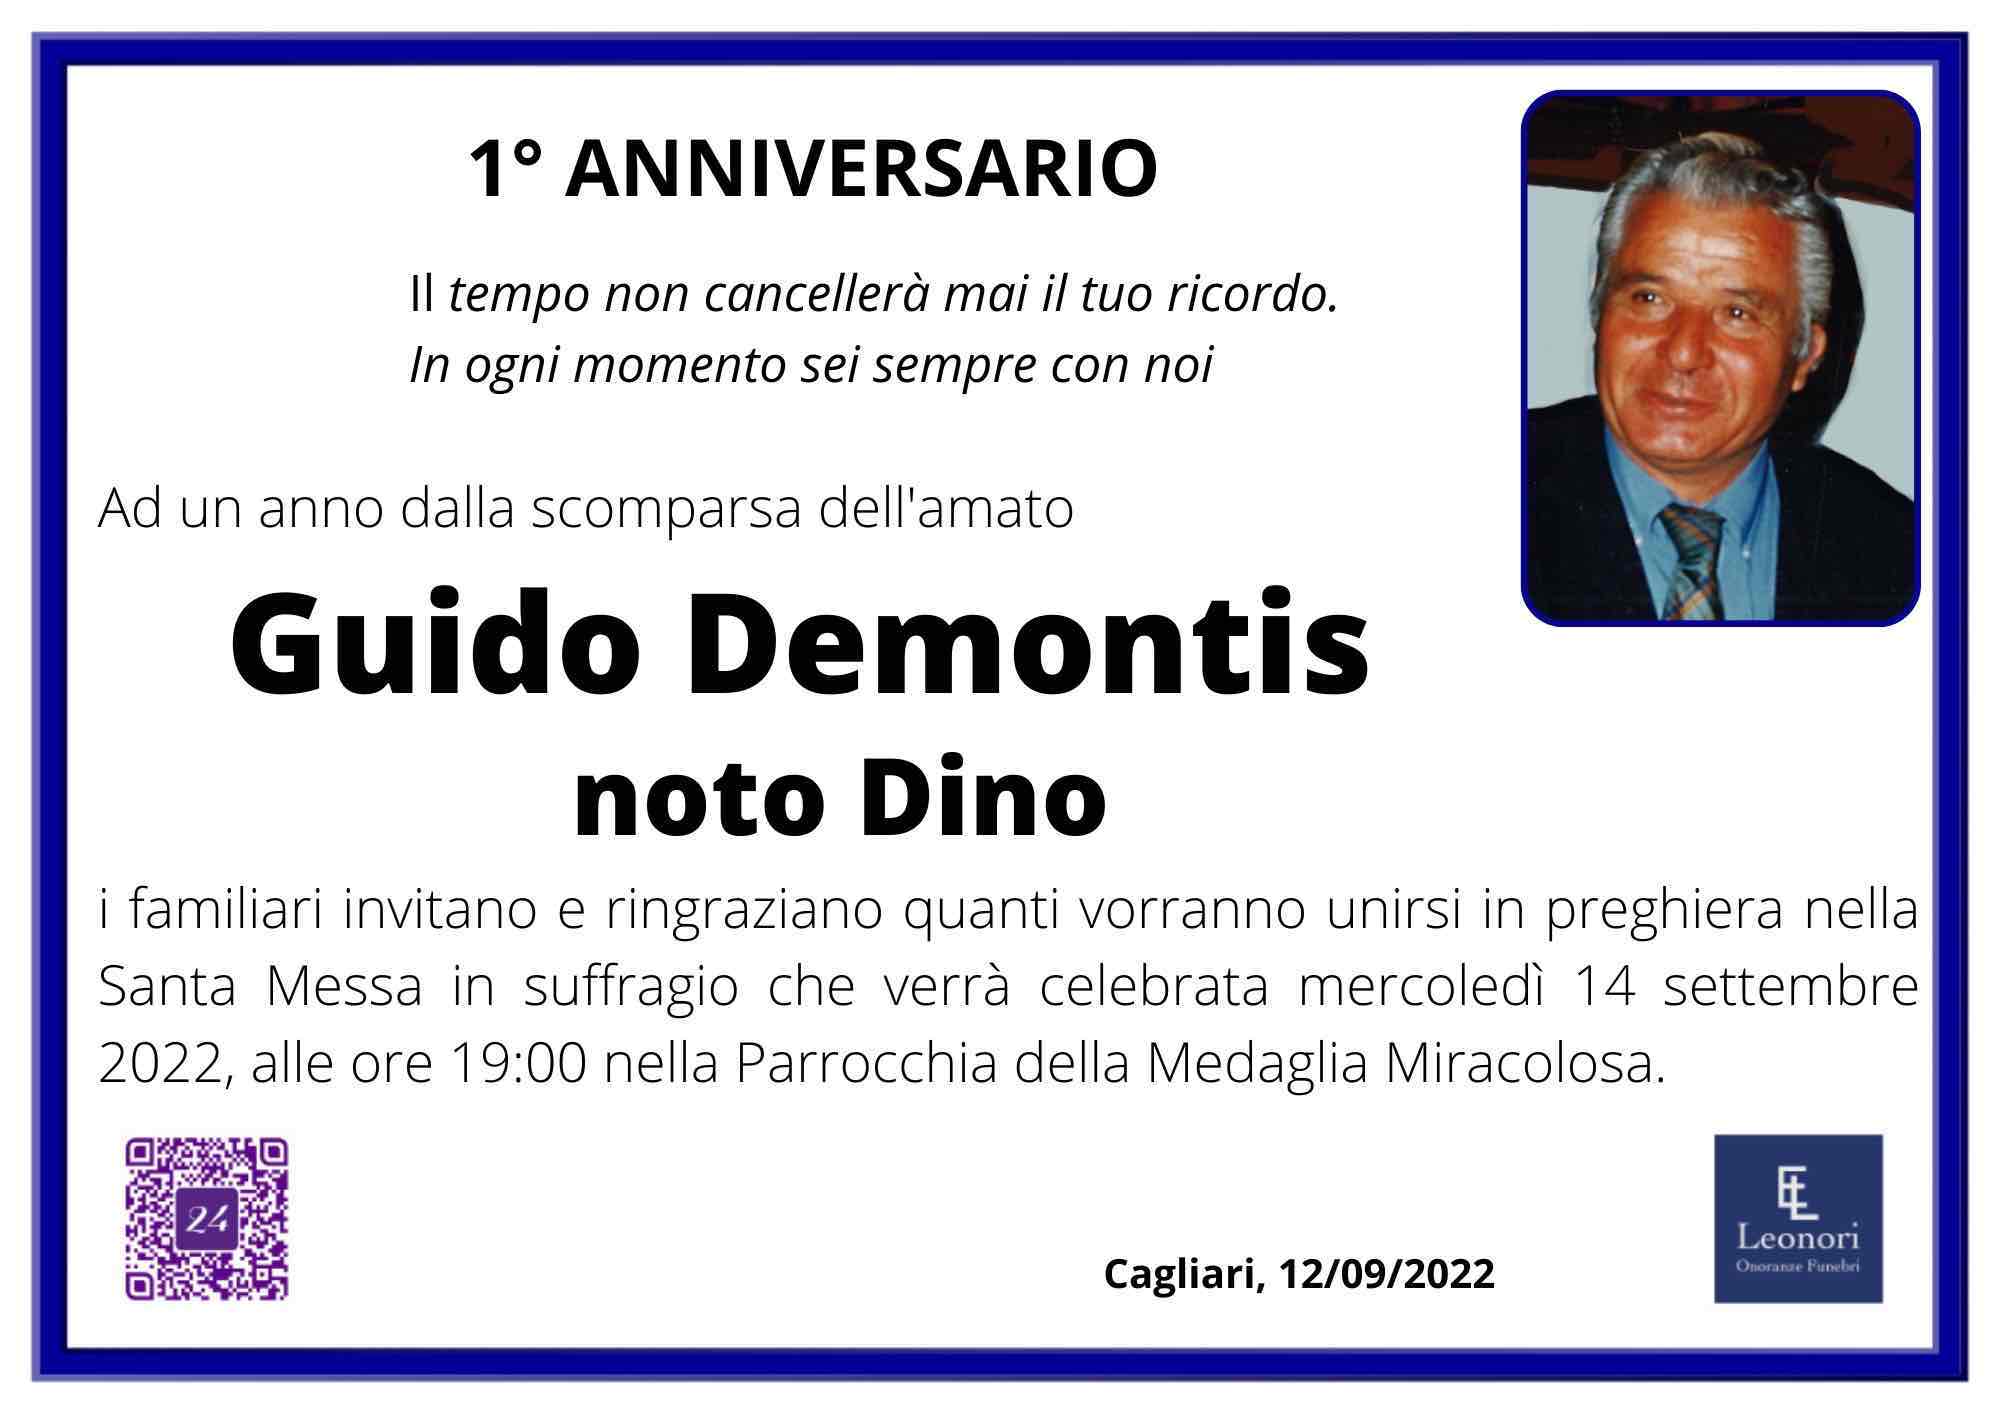 Guido Demontis